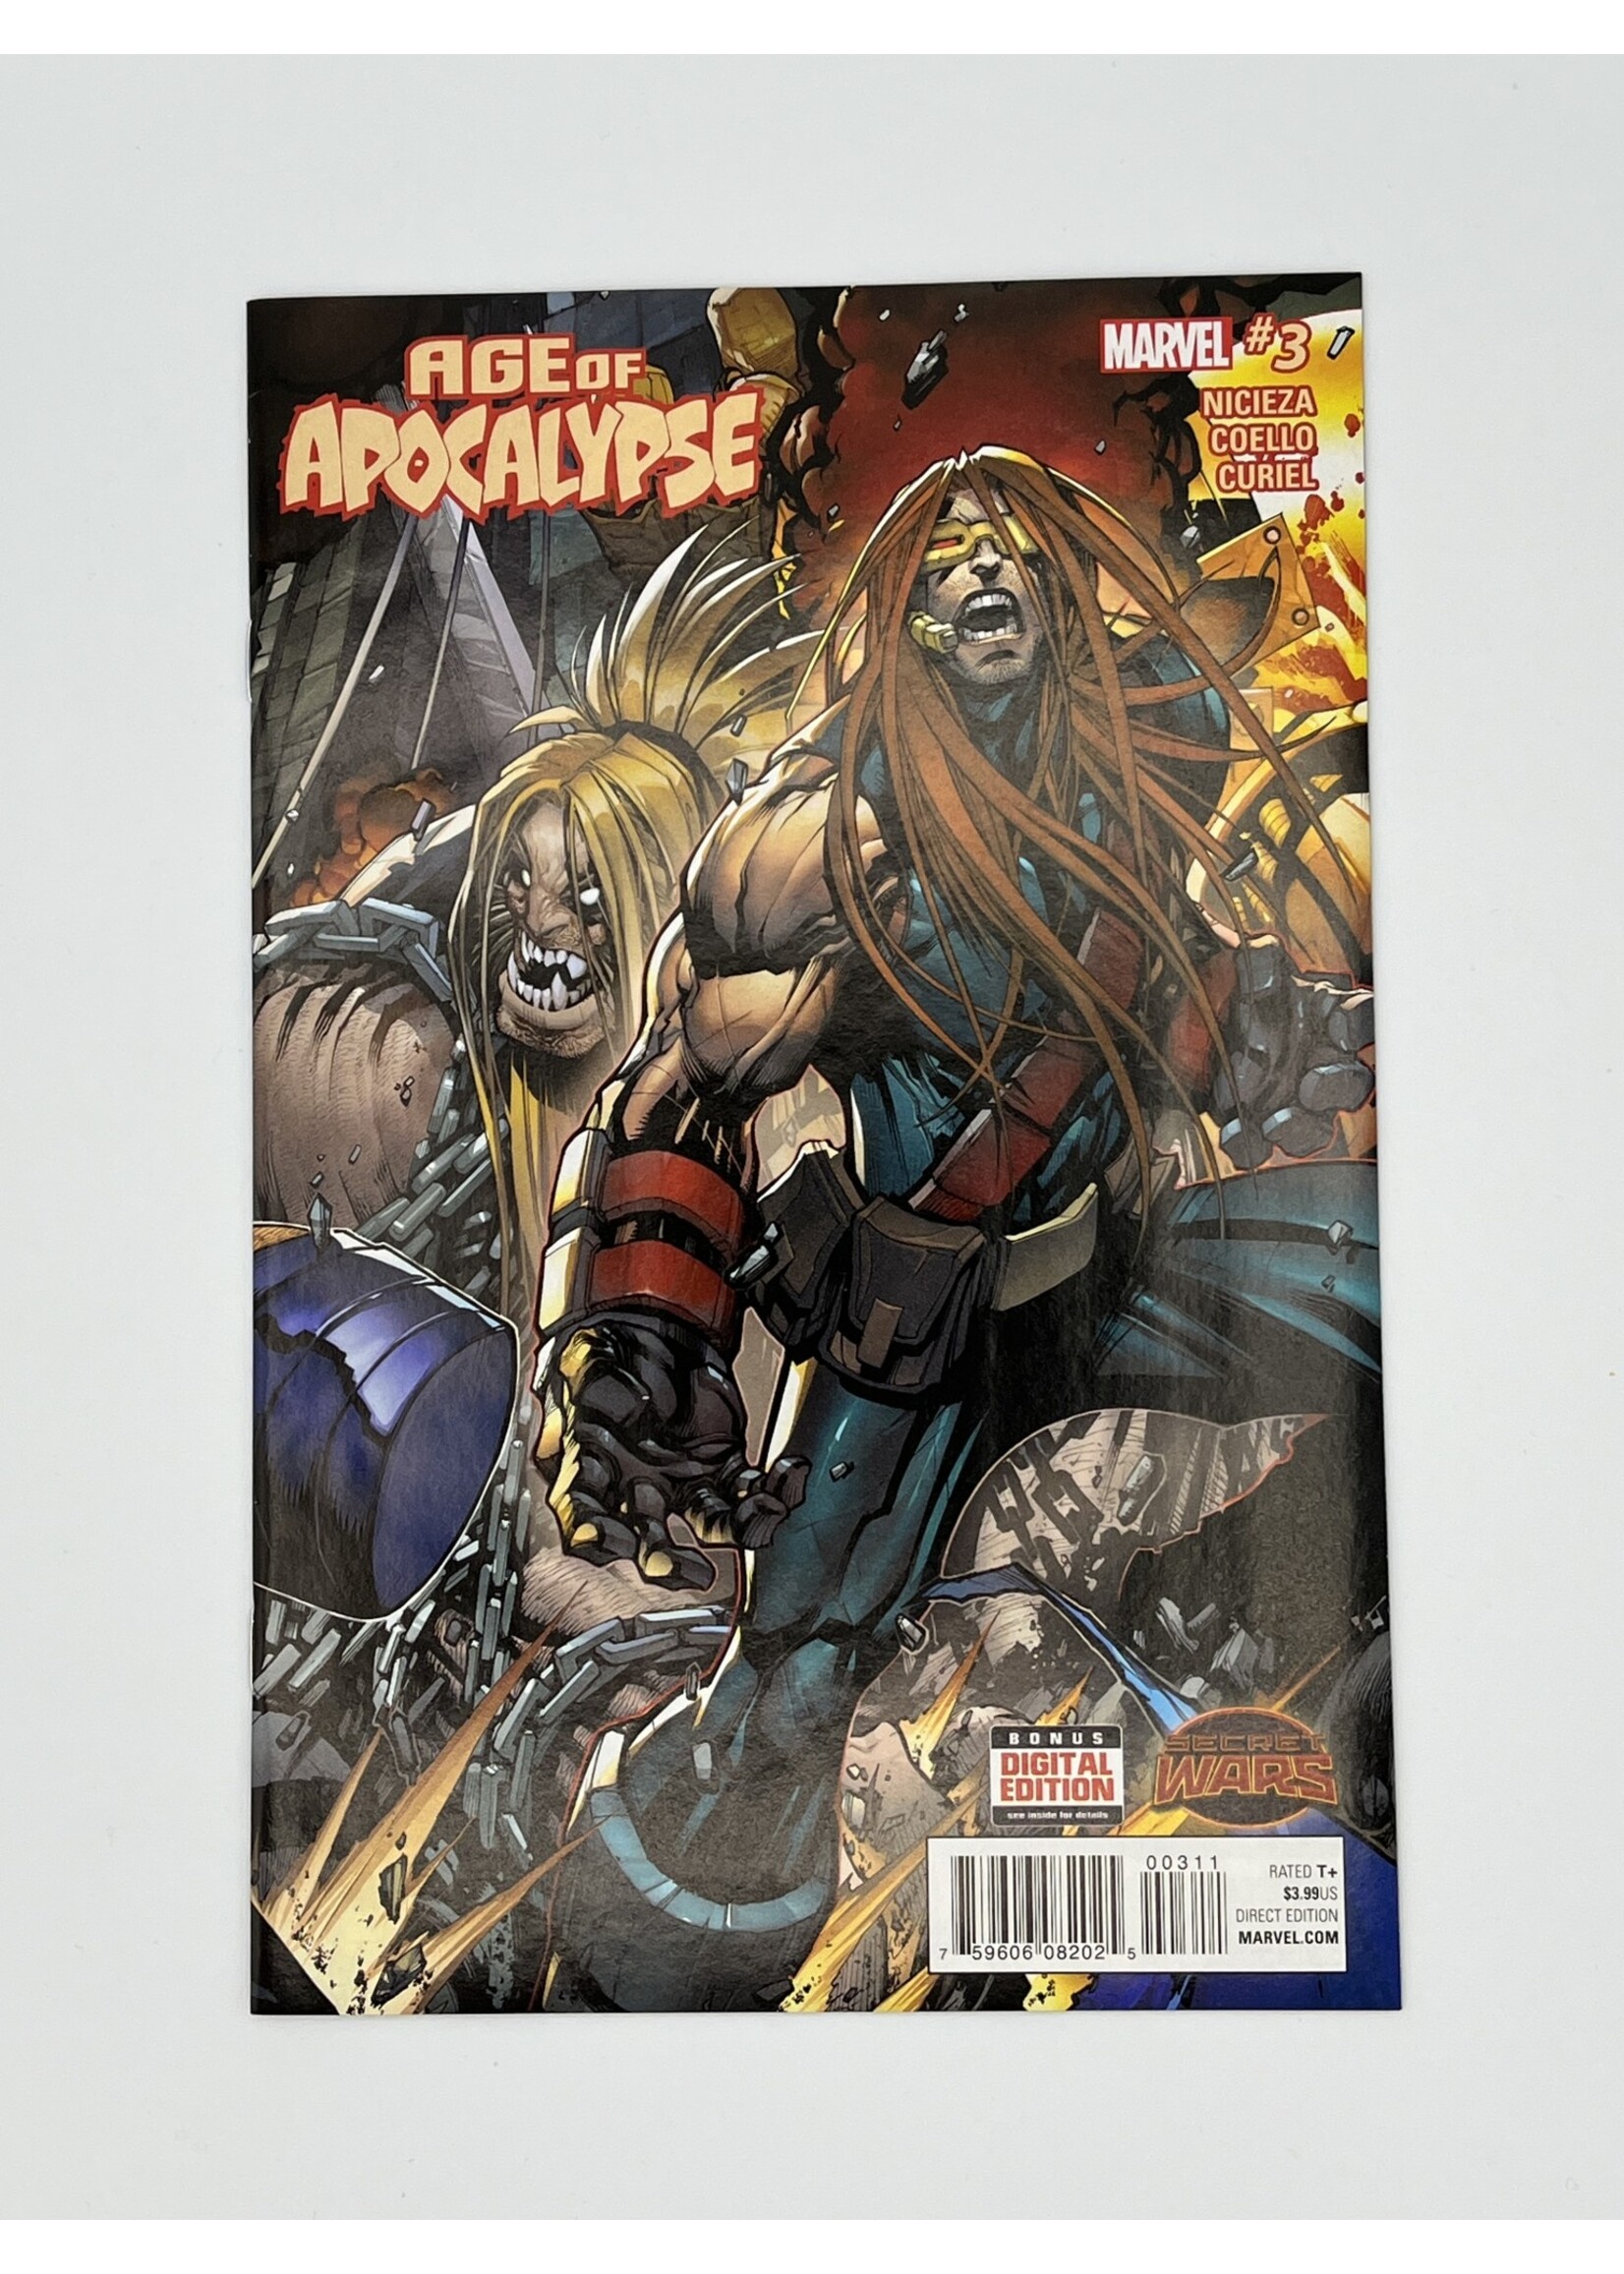 Marvel AGE OF APOCALYPSE #3 Marvel November 2015